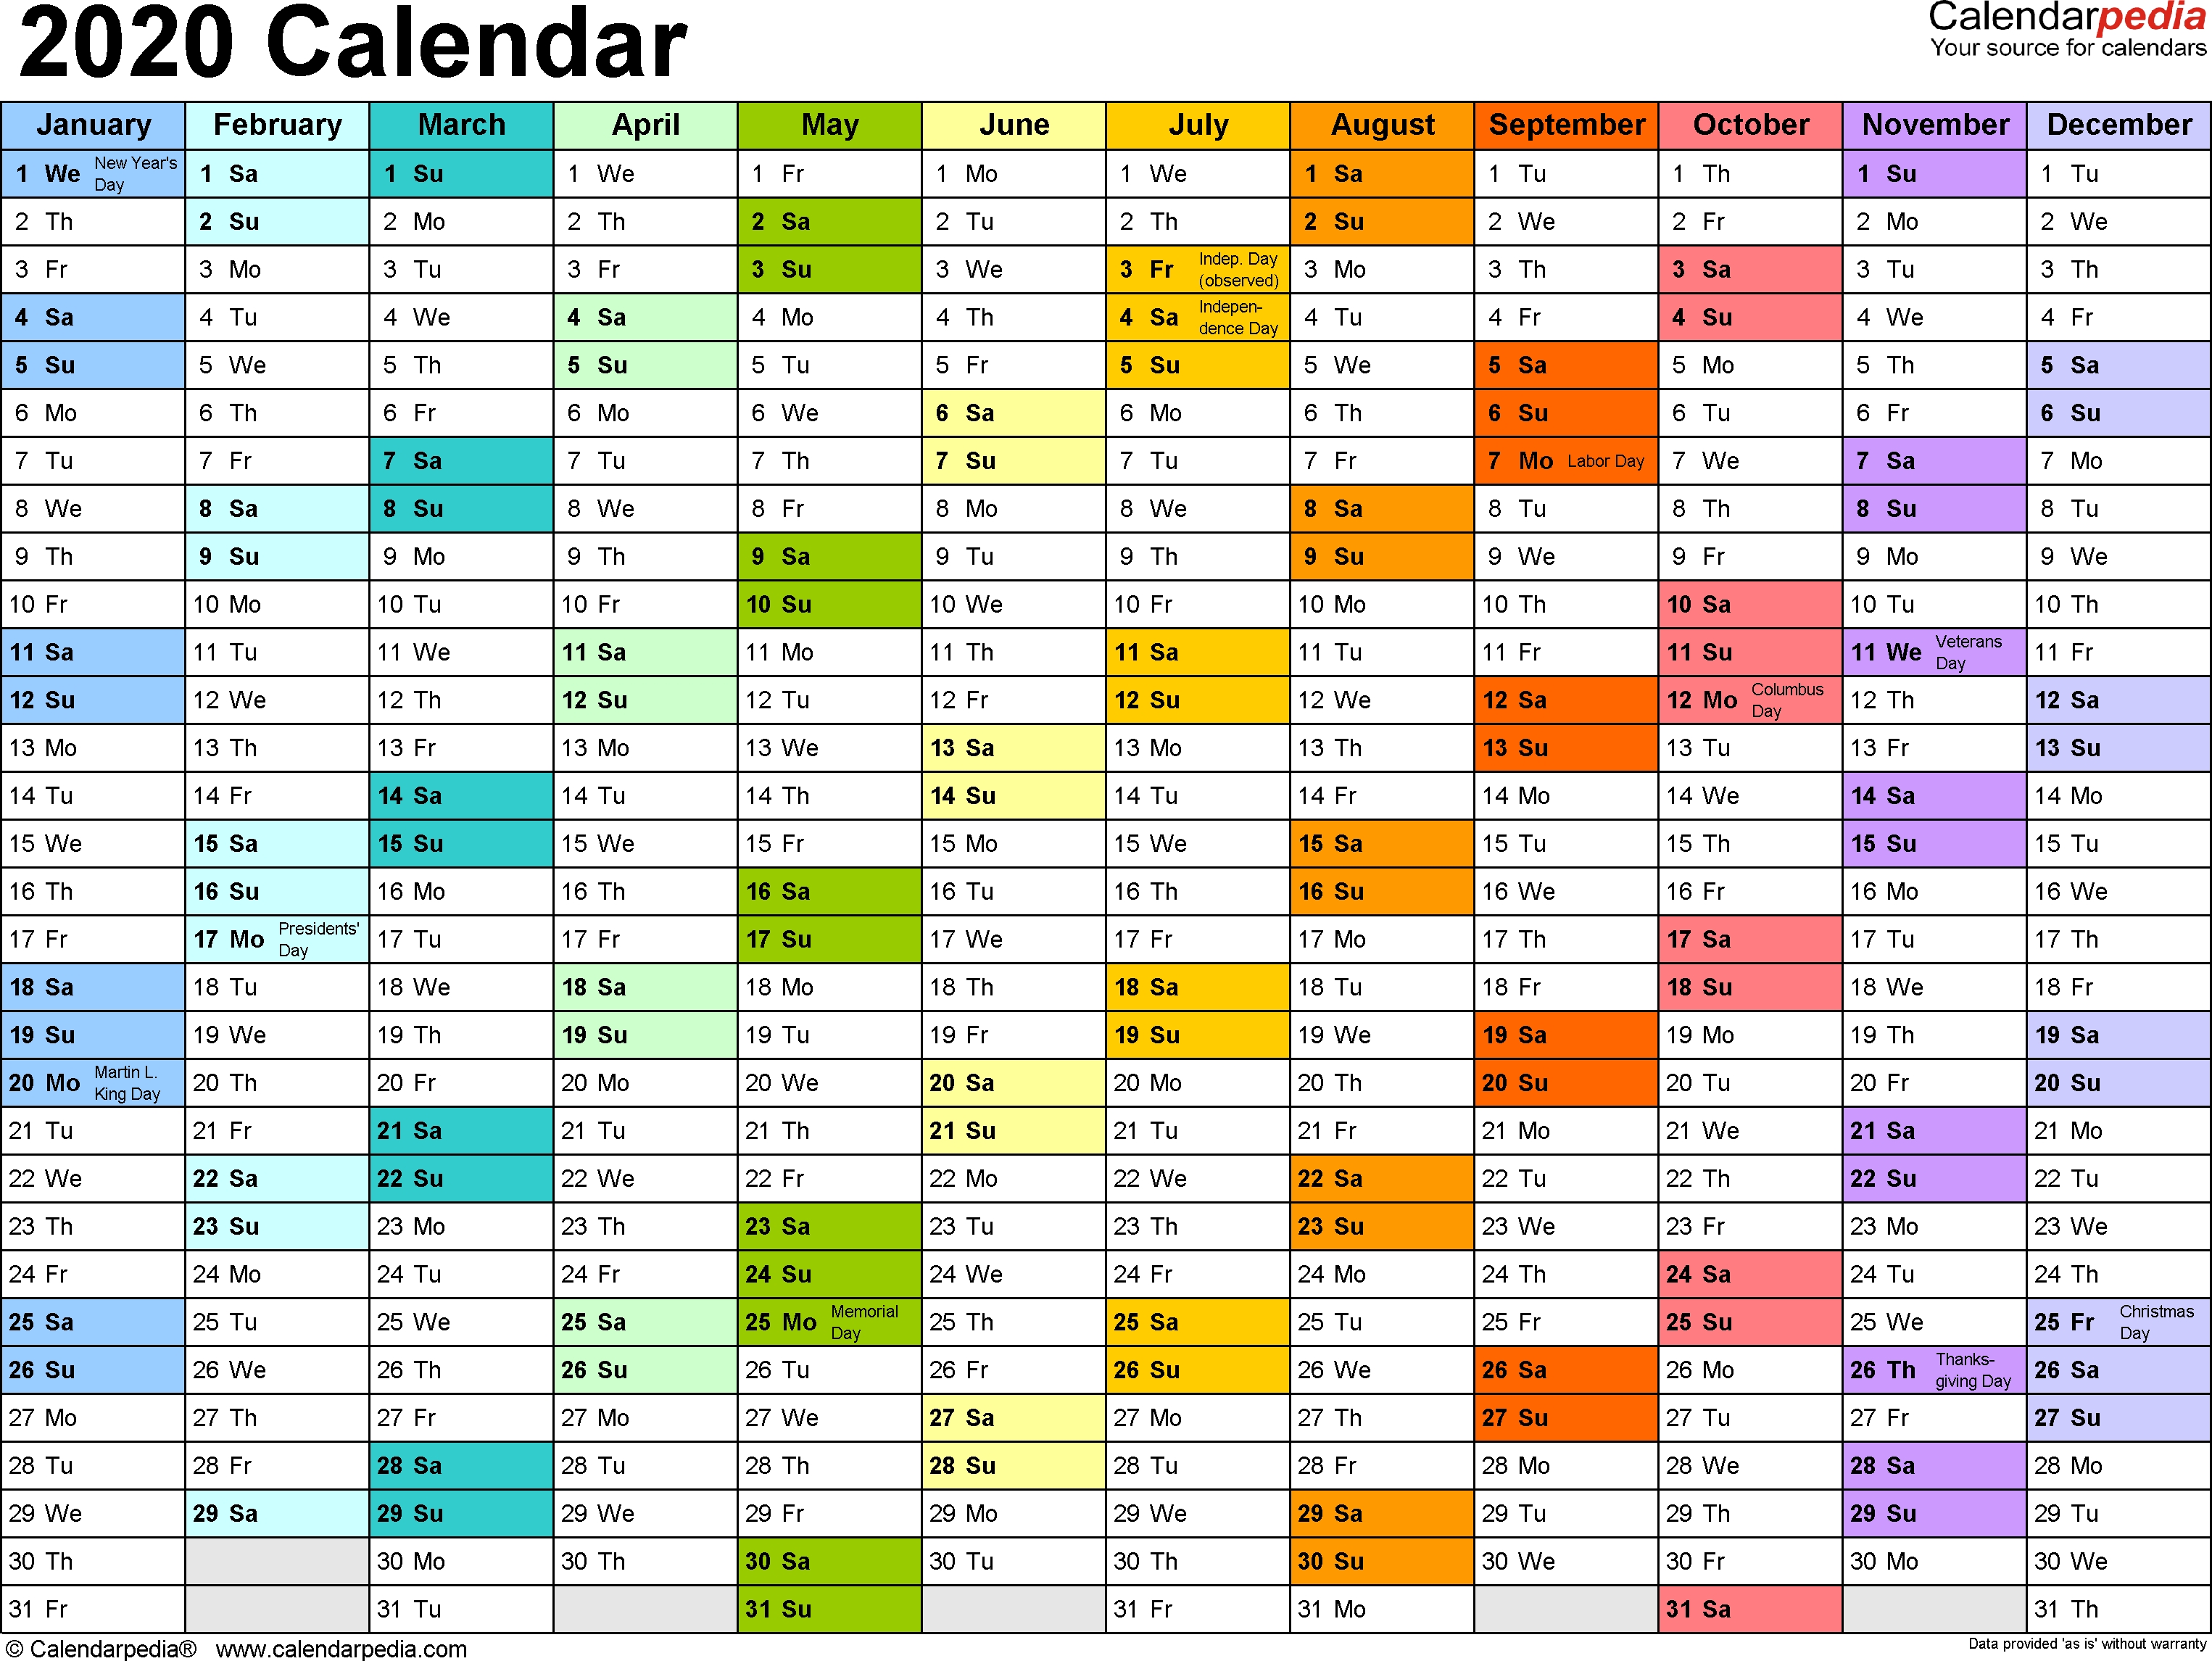 2020 Calendar Pdf - 18 Free Printable Calendar Templates-Does Indesign Have A 2020 Calendar Template